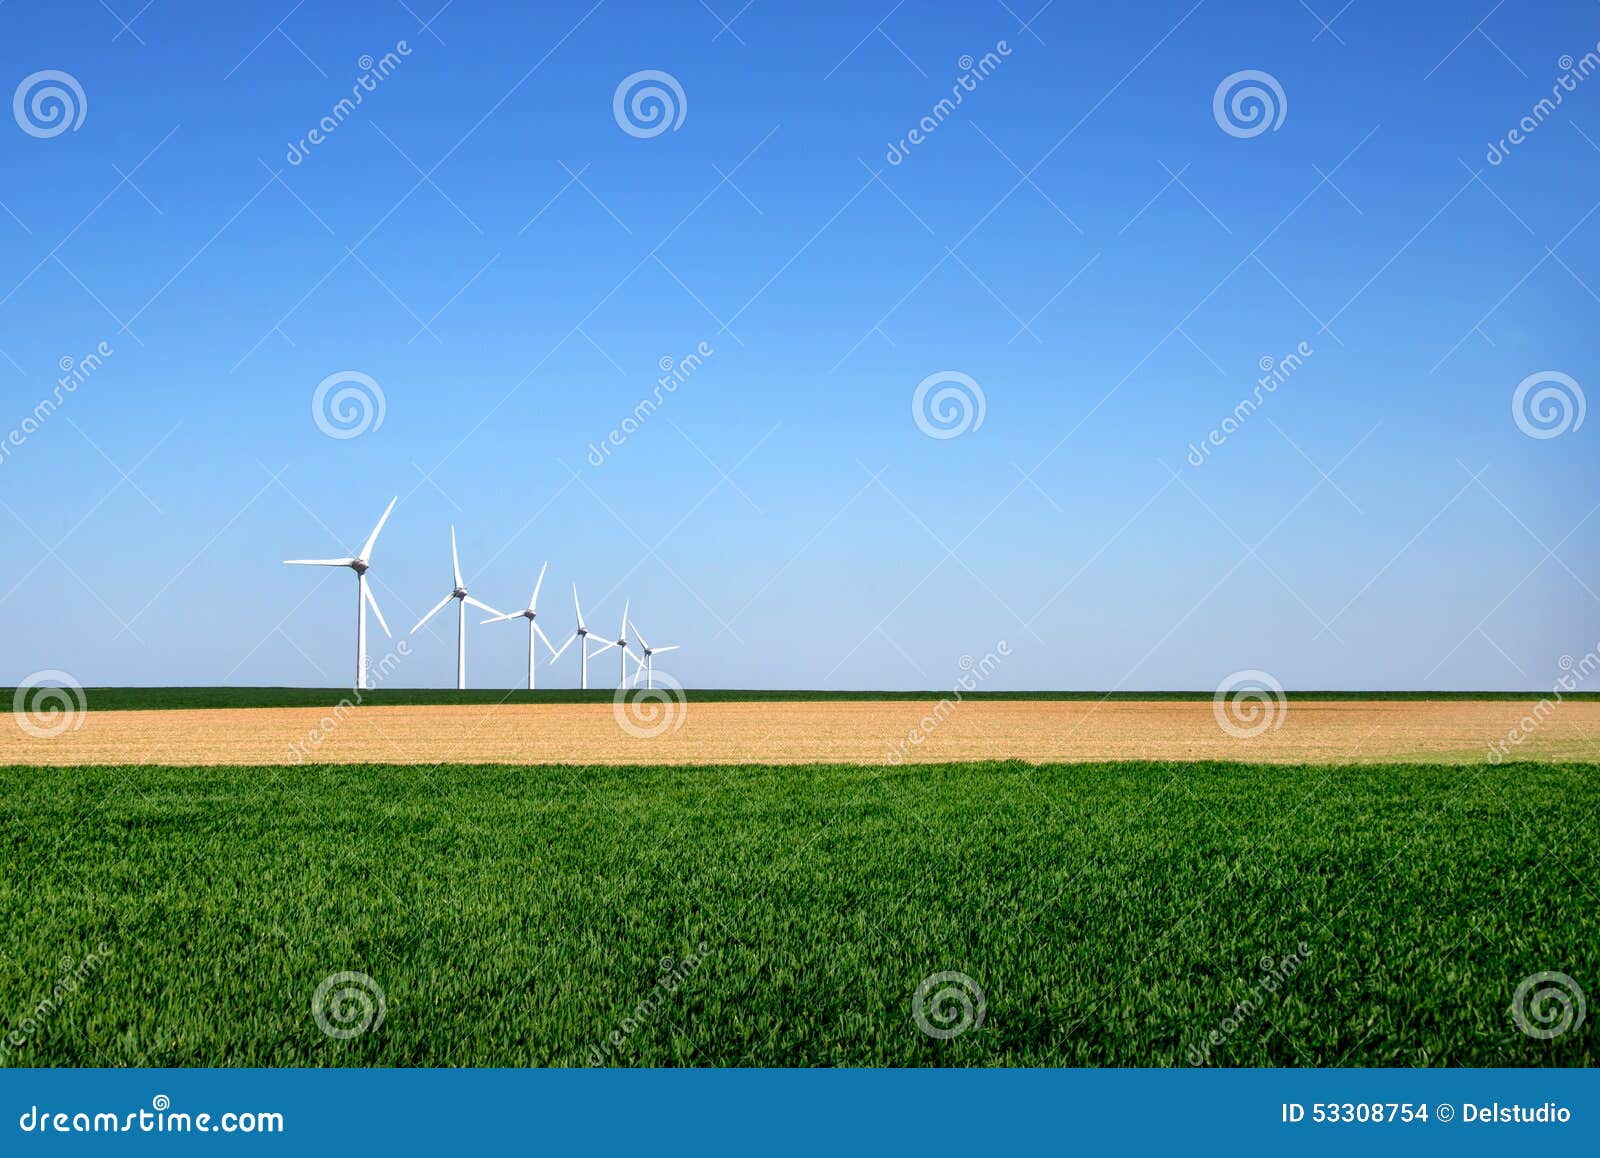 graphic modern landscape of wind turbines aligned in a field